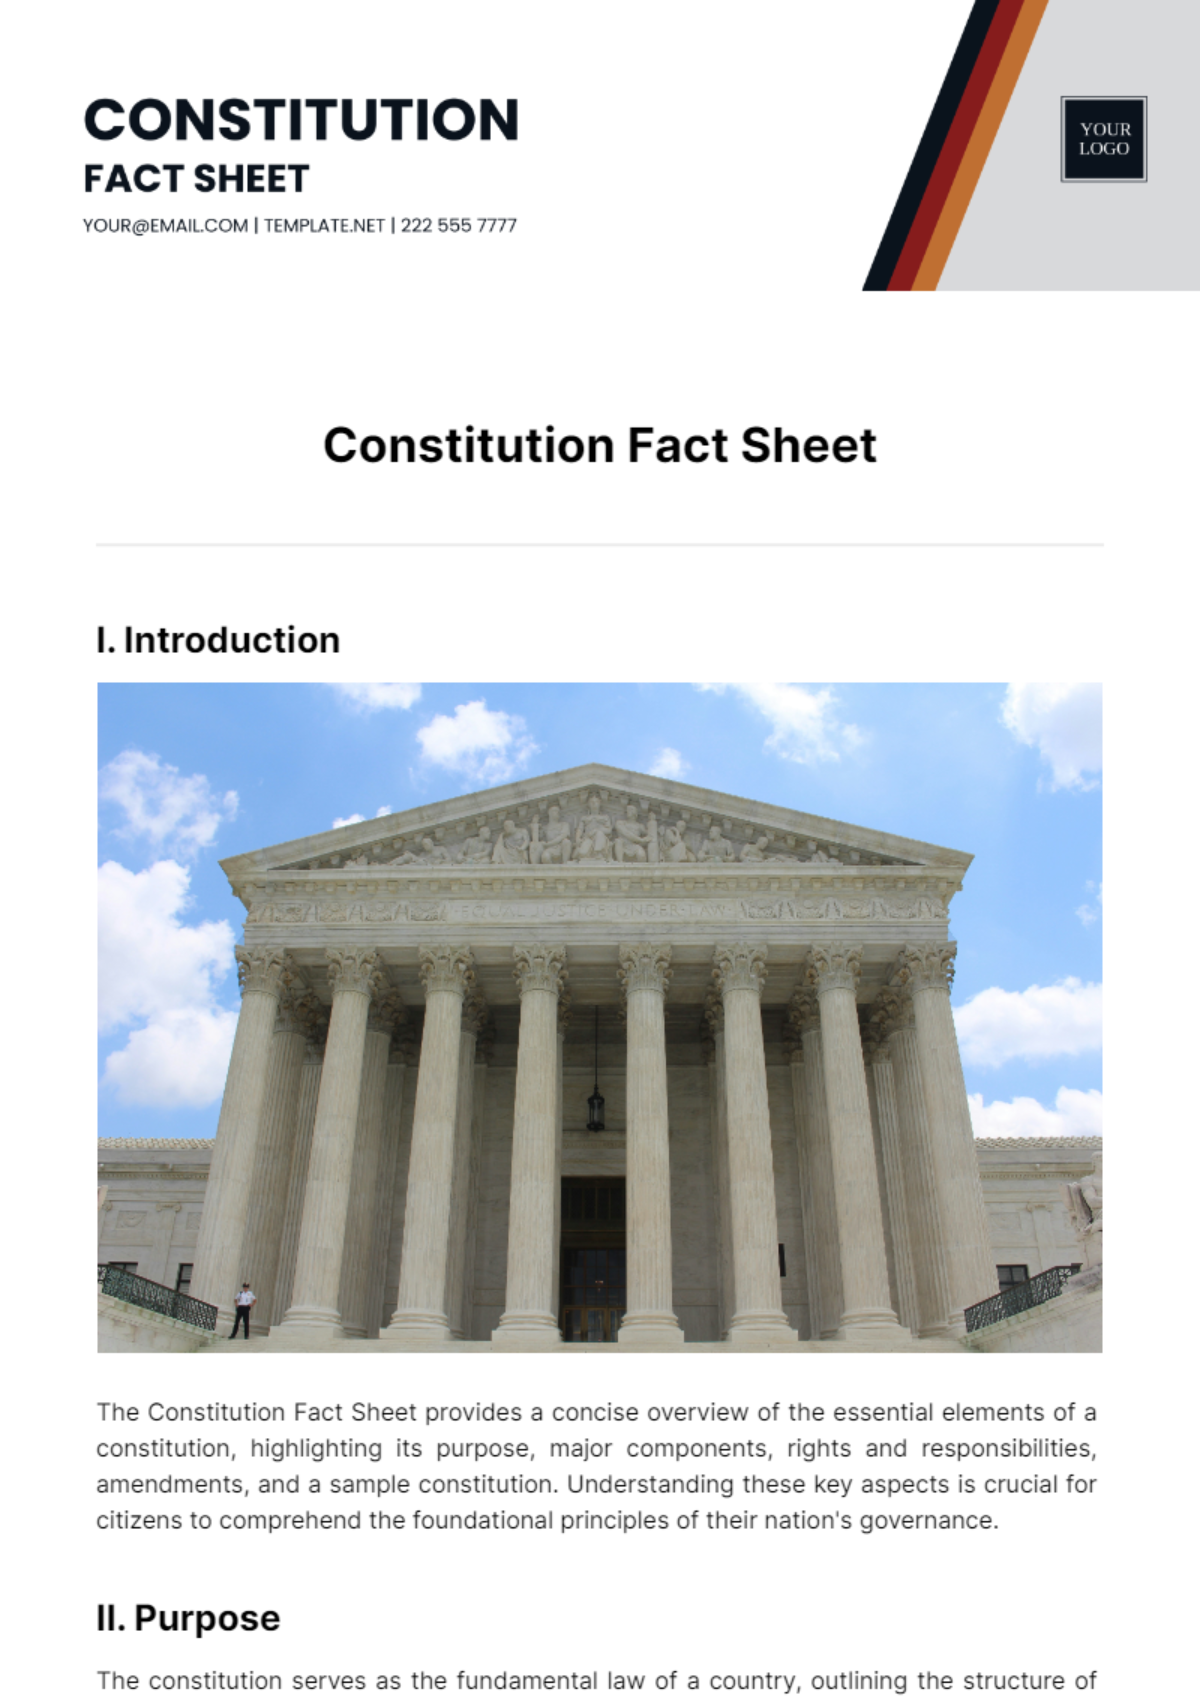 Constitution Fact Sheet Template